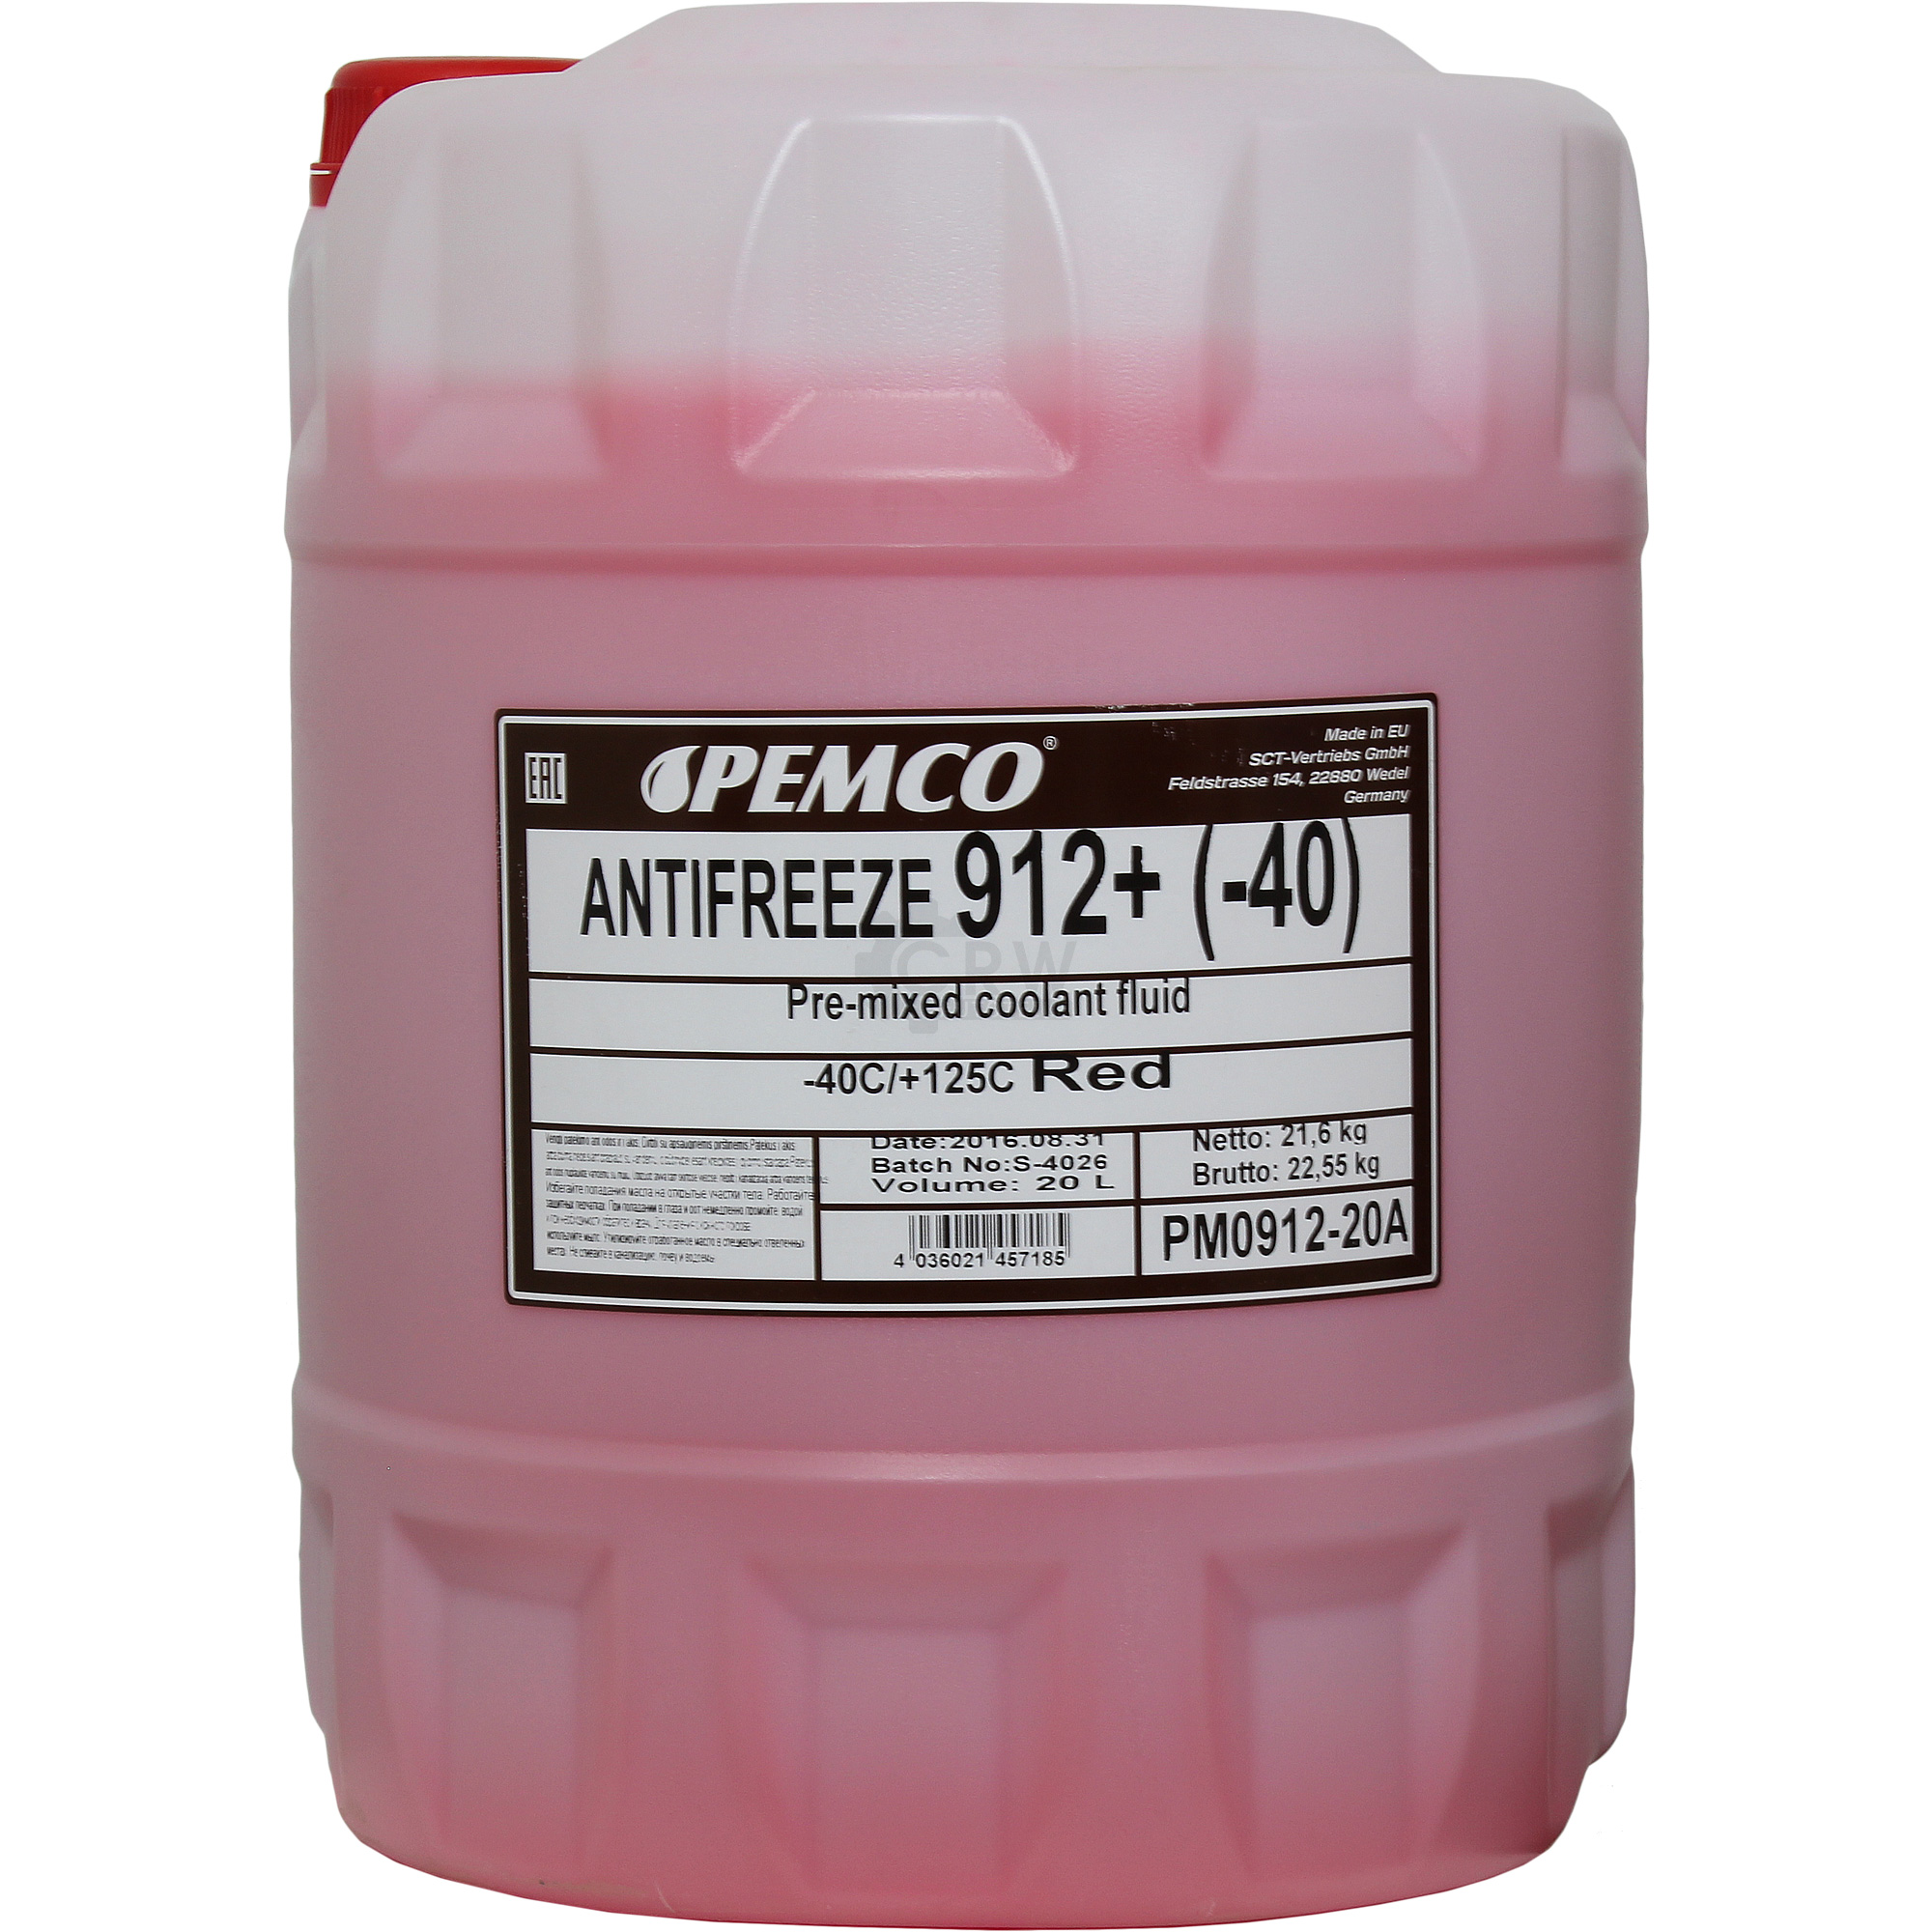 20 Liter  PEMCO Kühlerfrostschutz Antifreeze 912+ (-40) ROT ROSA G12+